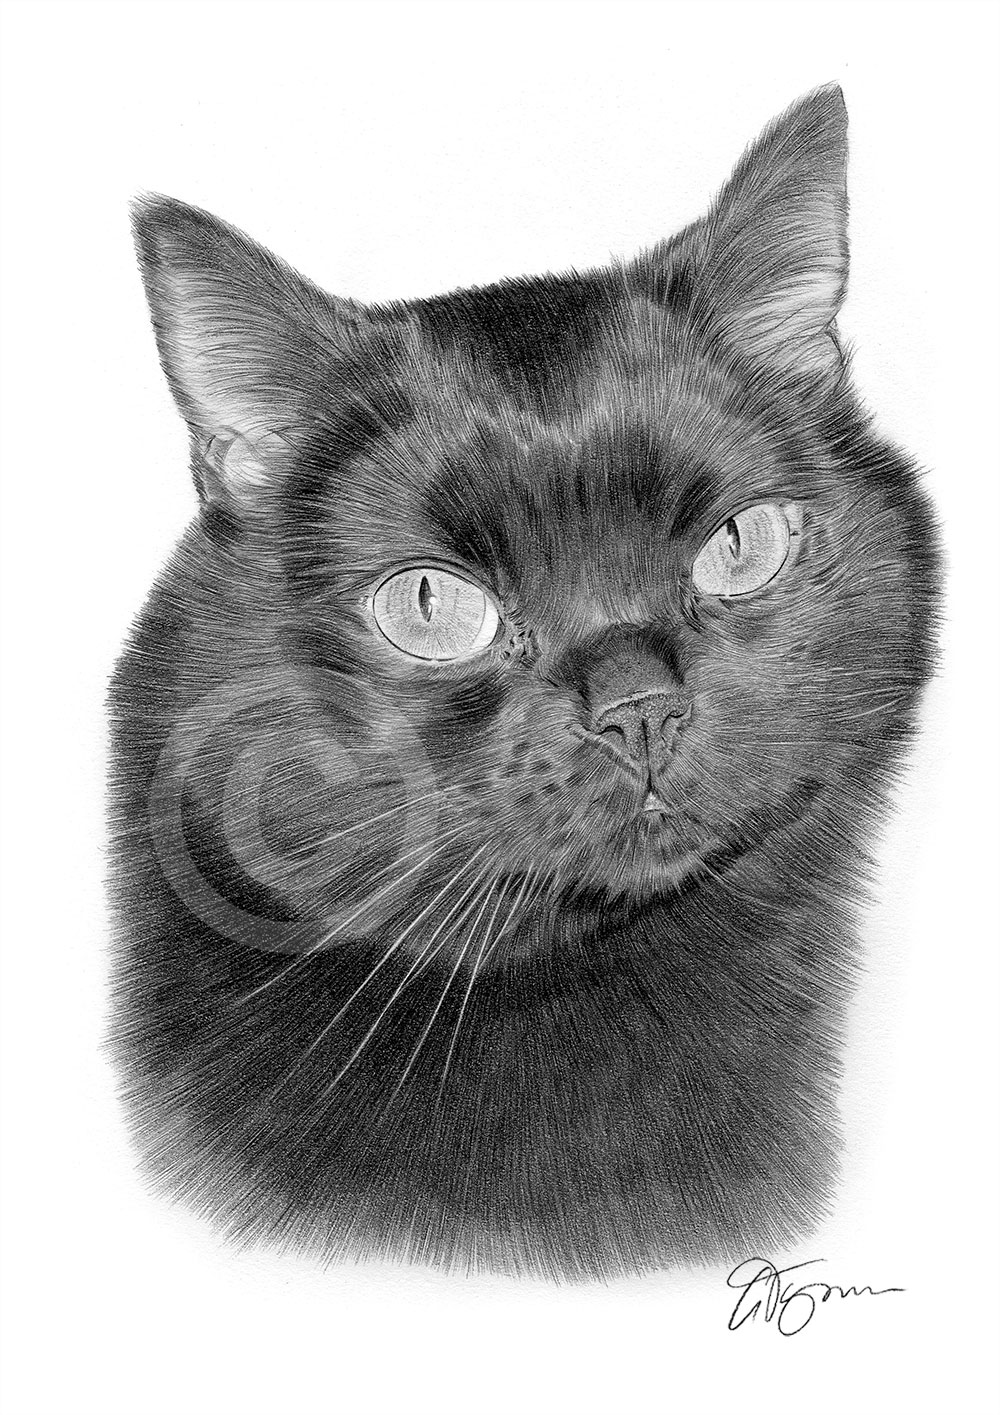 BLACK CAT art pencil drawing print A4 / A3 signed by artist Pet